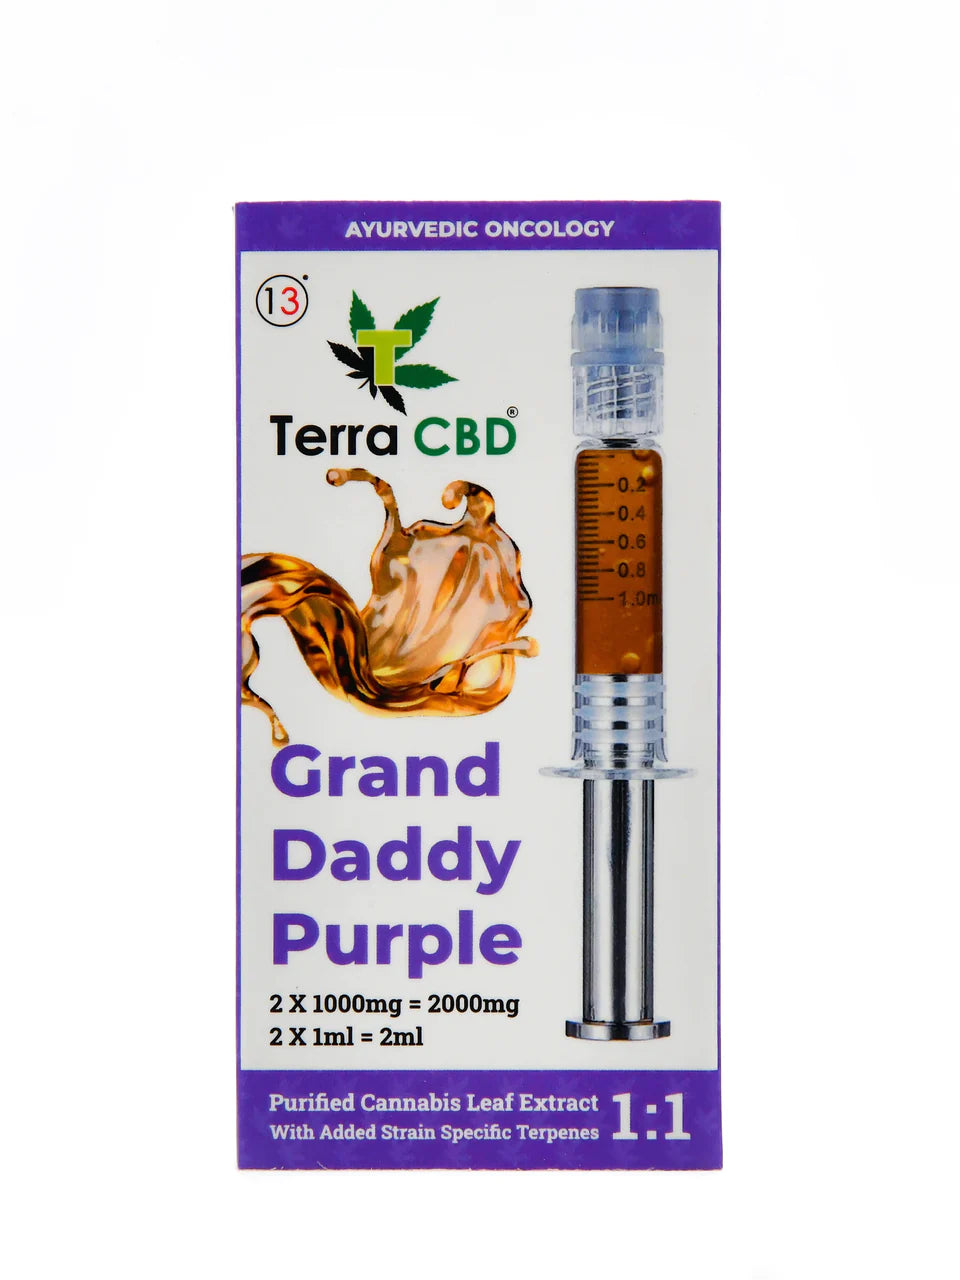 granddaddy purple strain